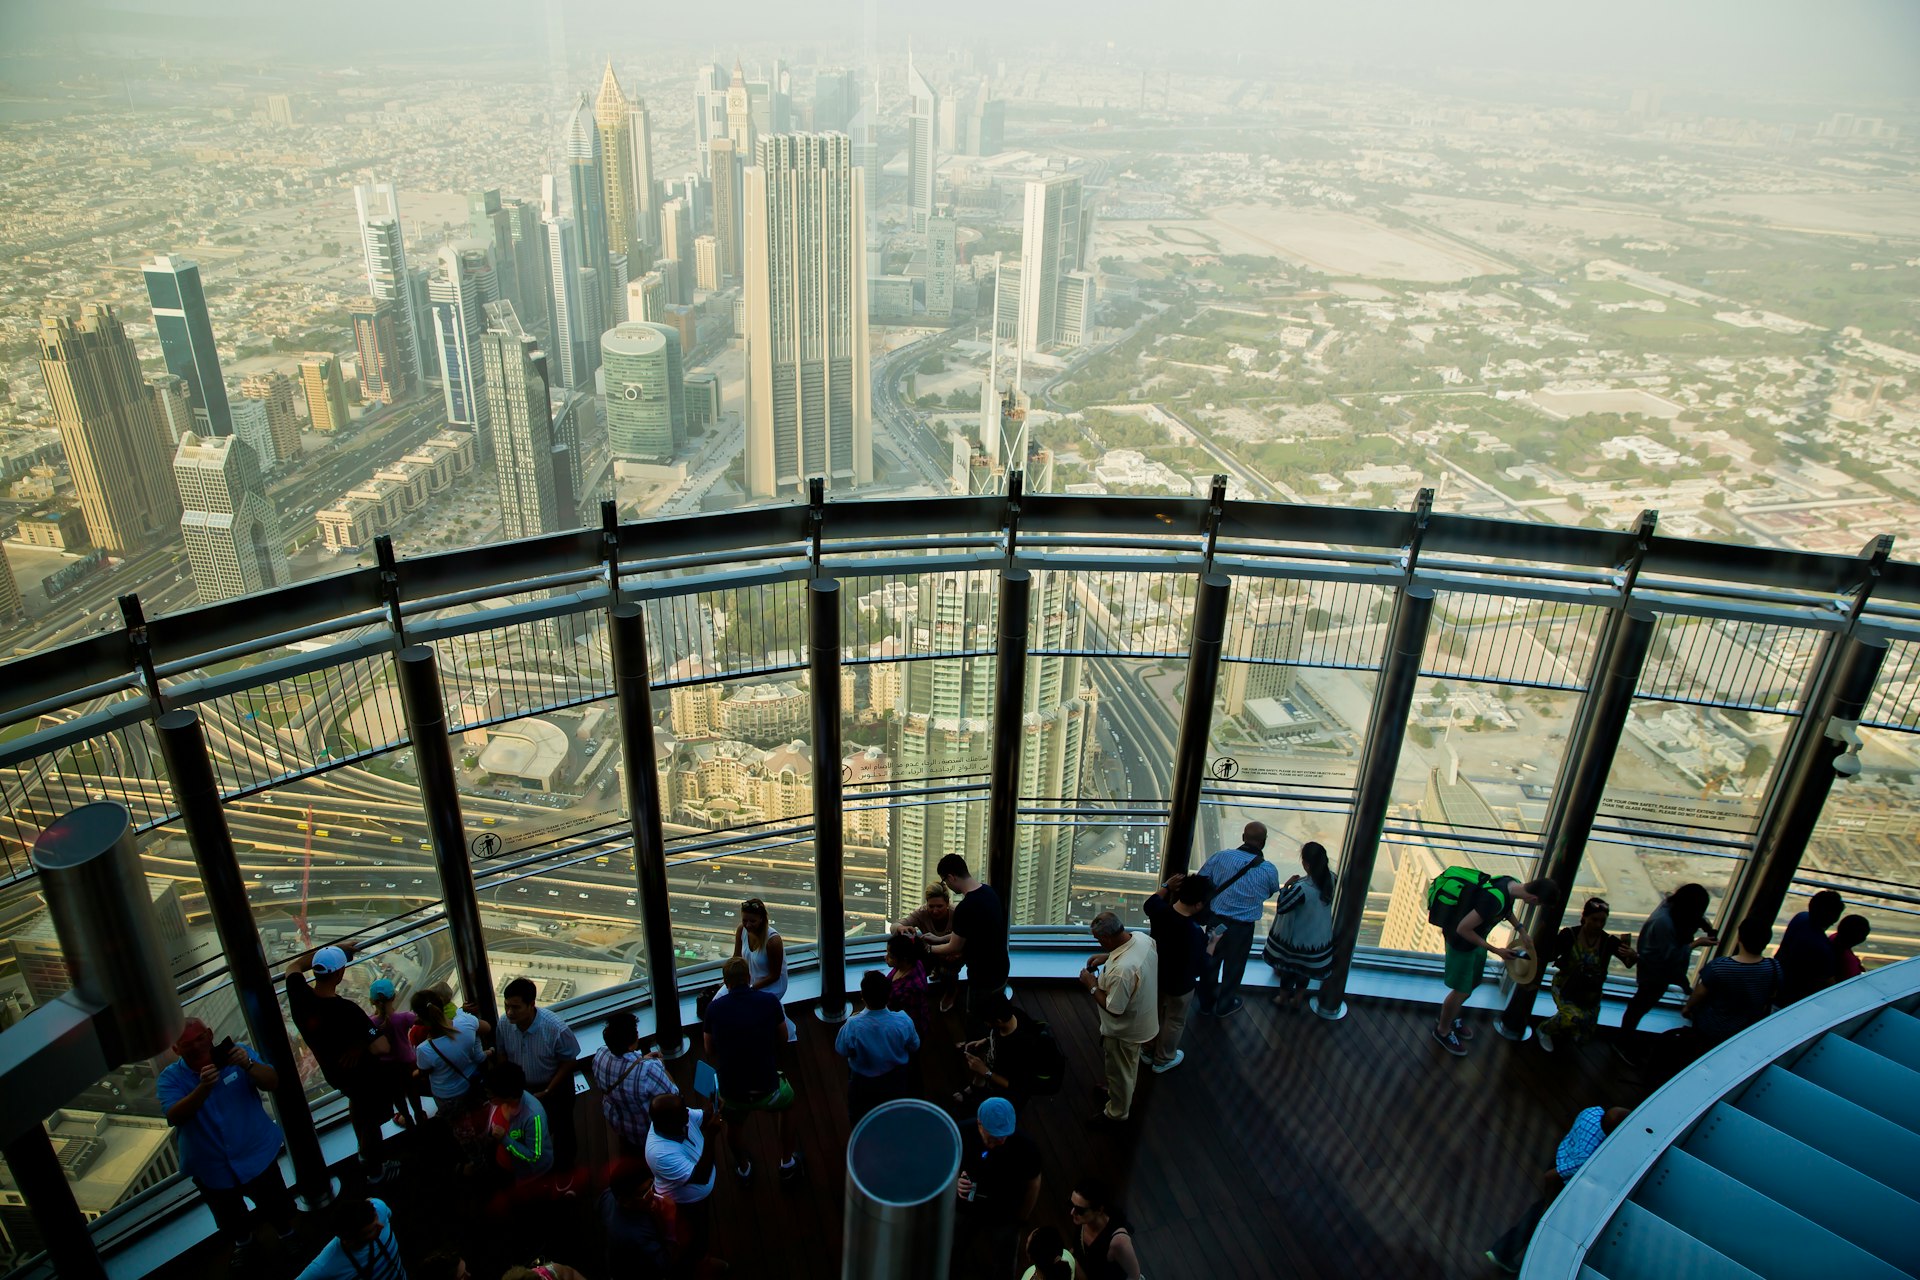 Visitors on the viewing platform at the Burj Khalifa, Dubai